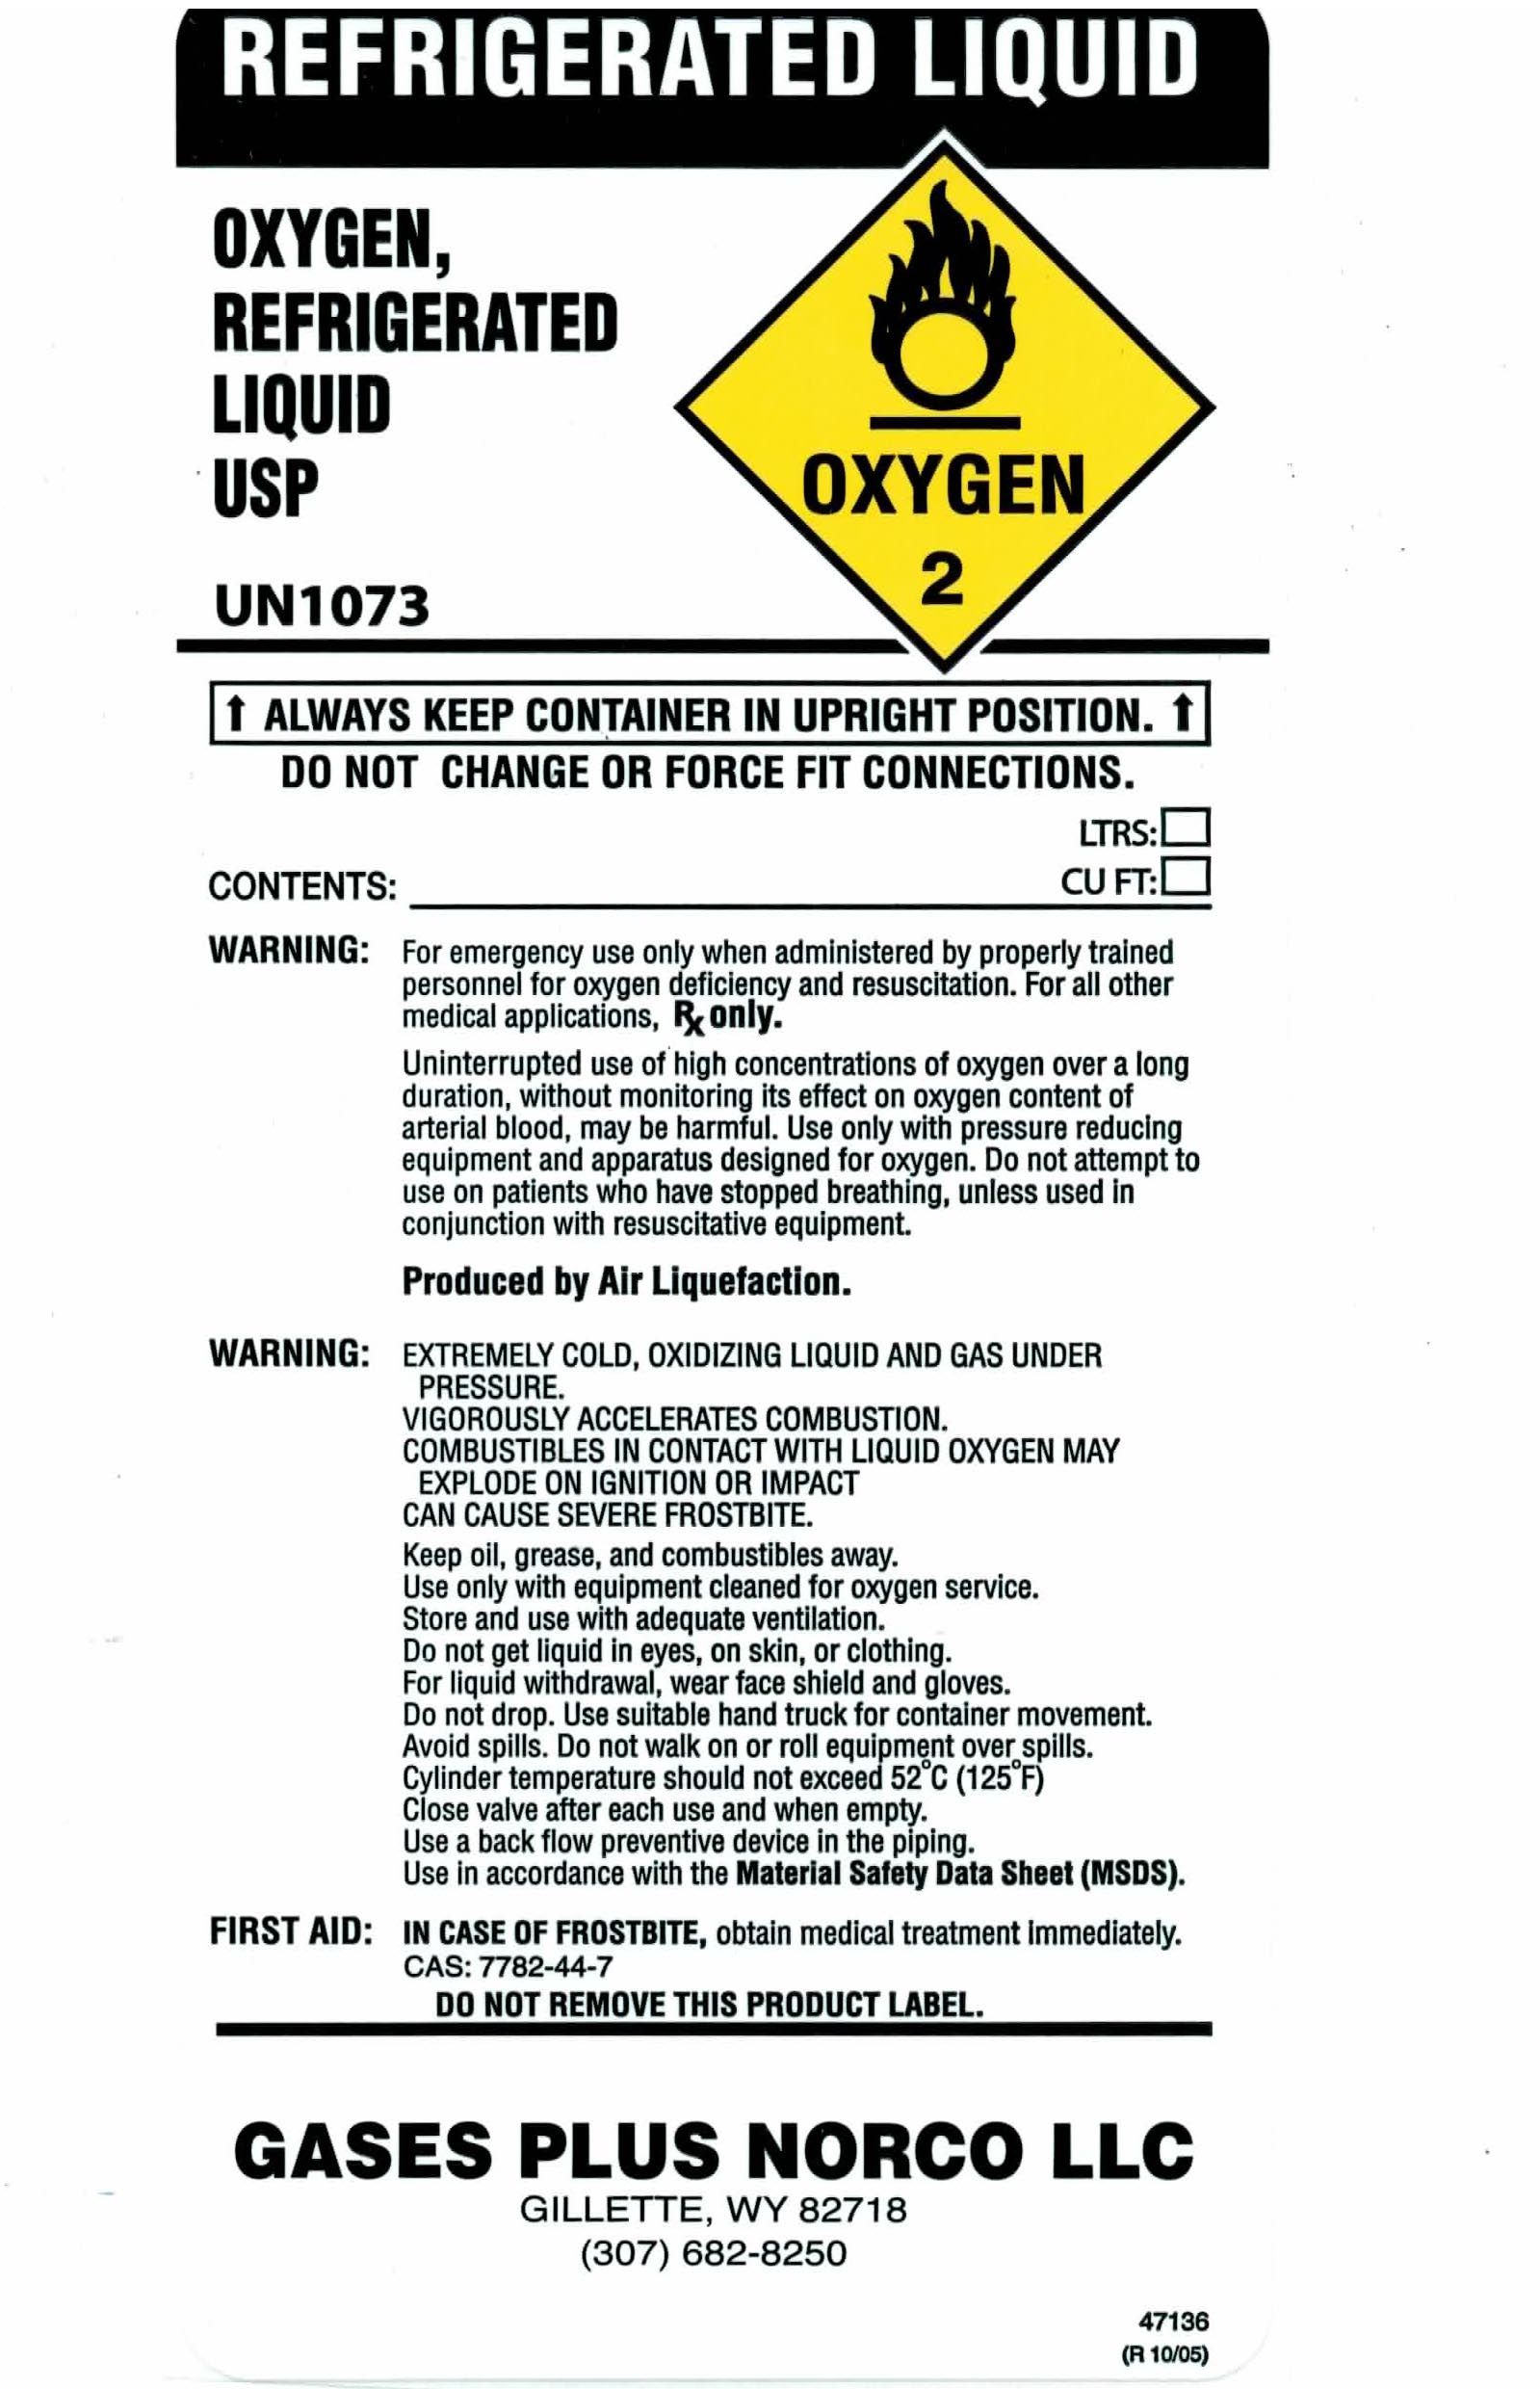 image of oxygen label